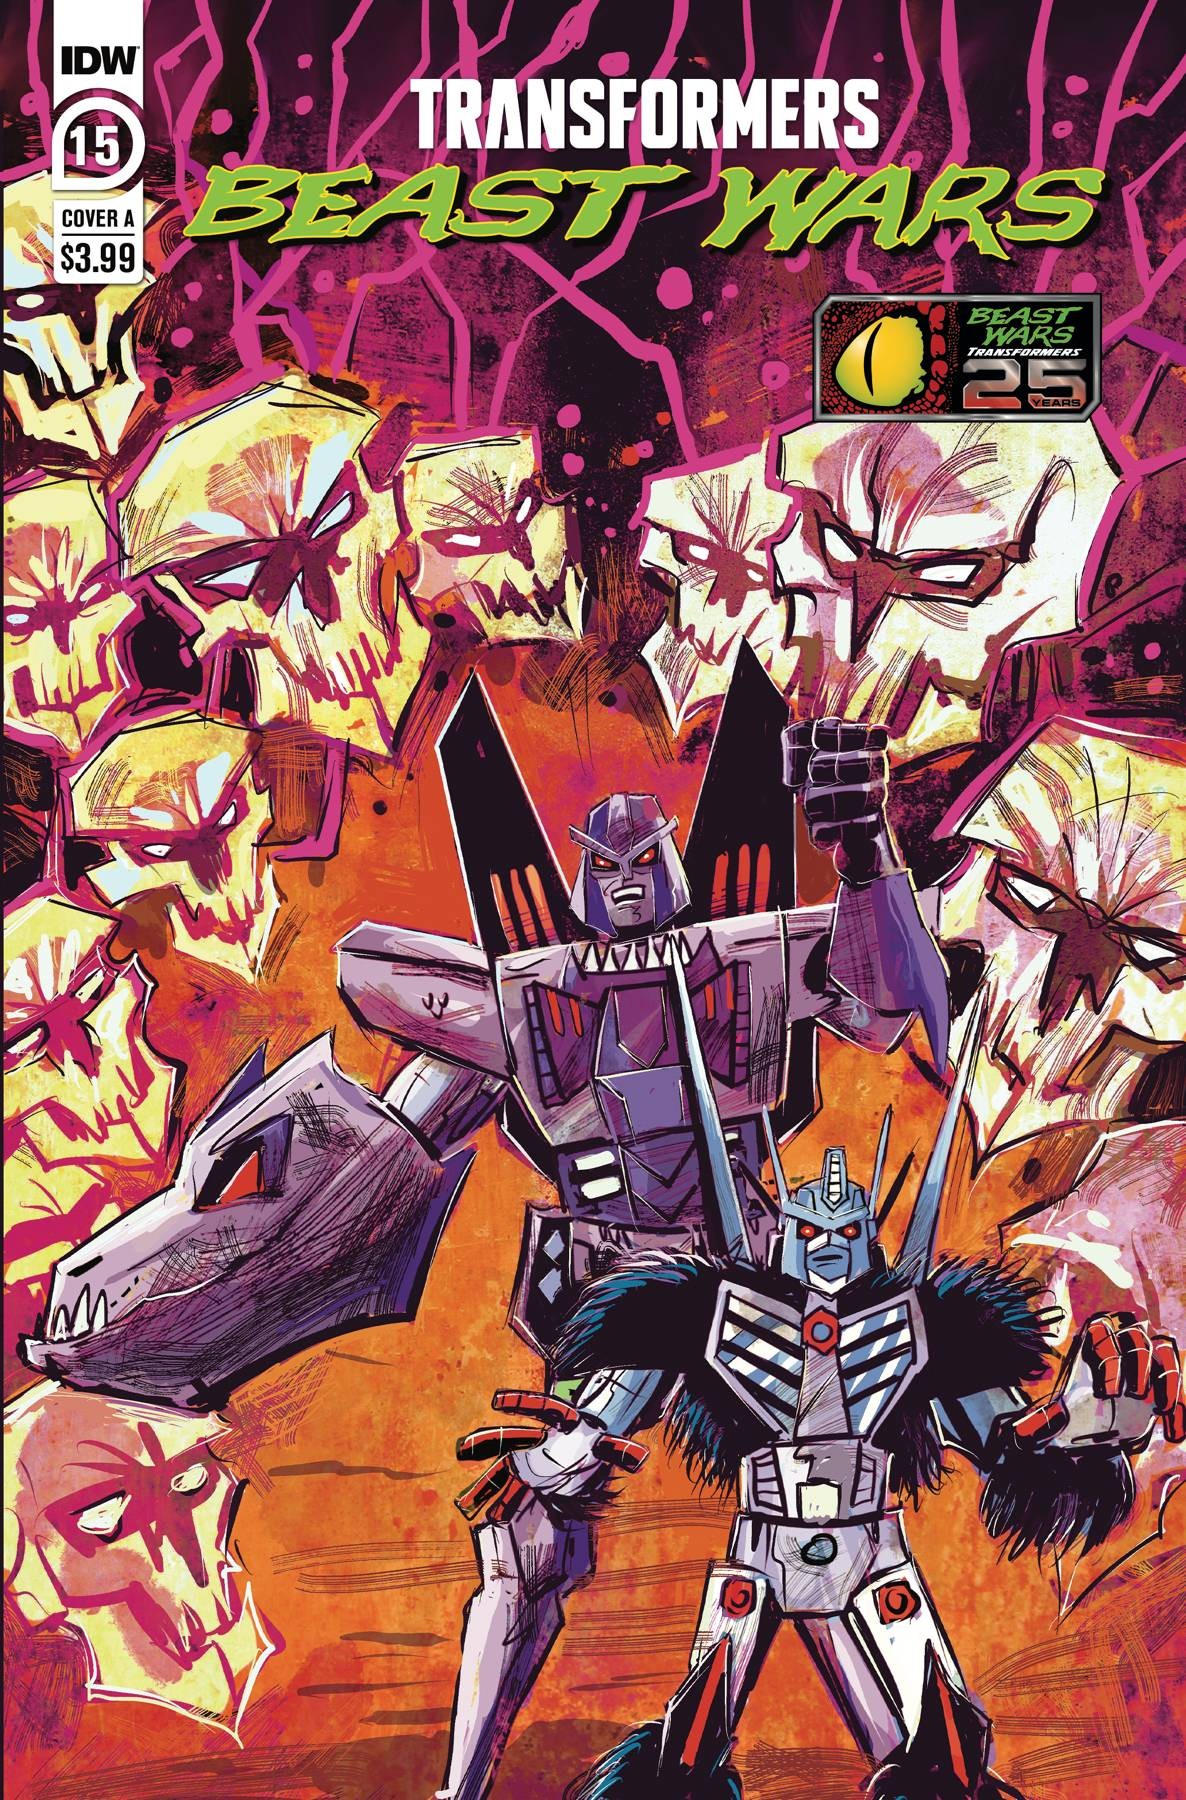 Transformers News: Solicitations for IDW Transformers Comics Coming April 2022